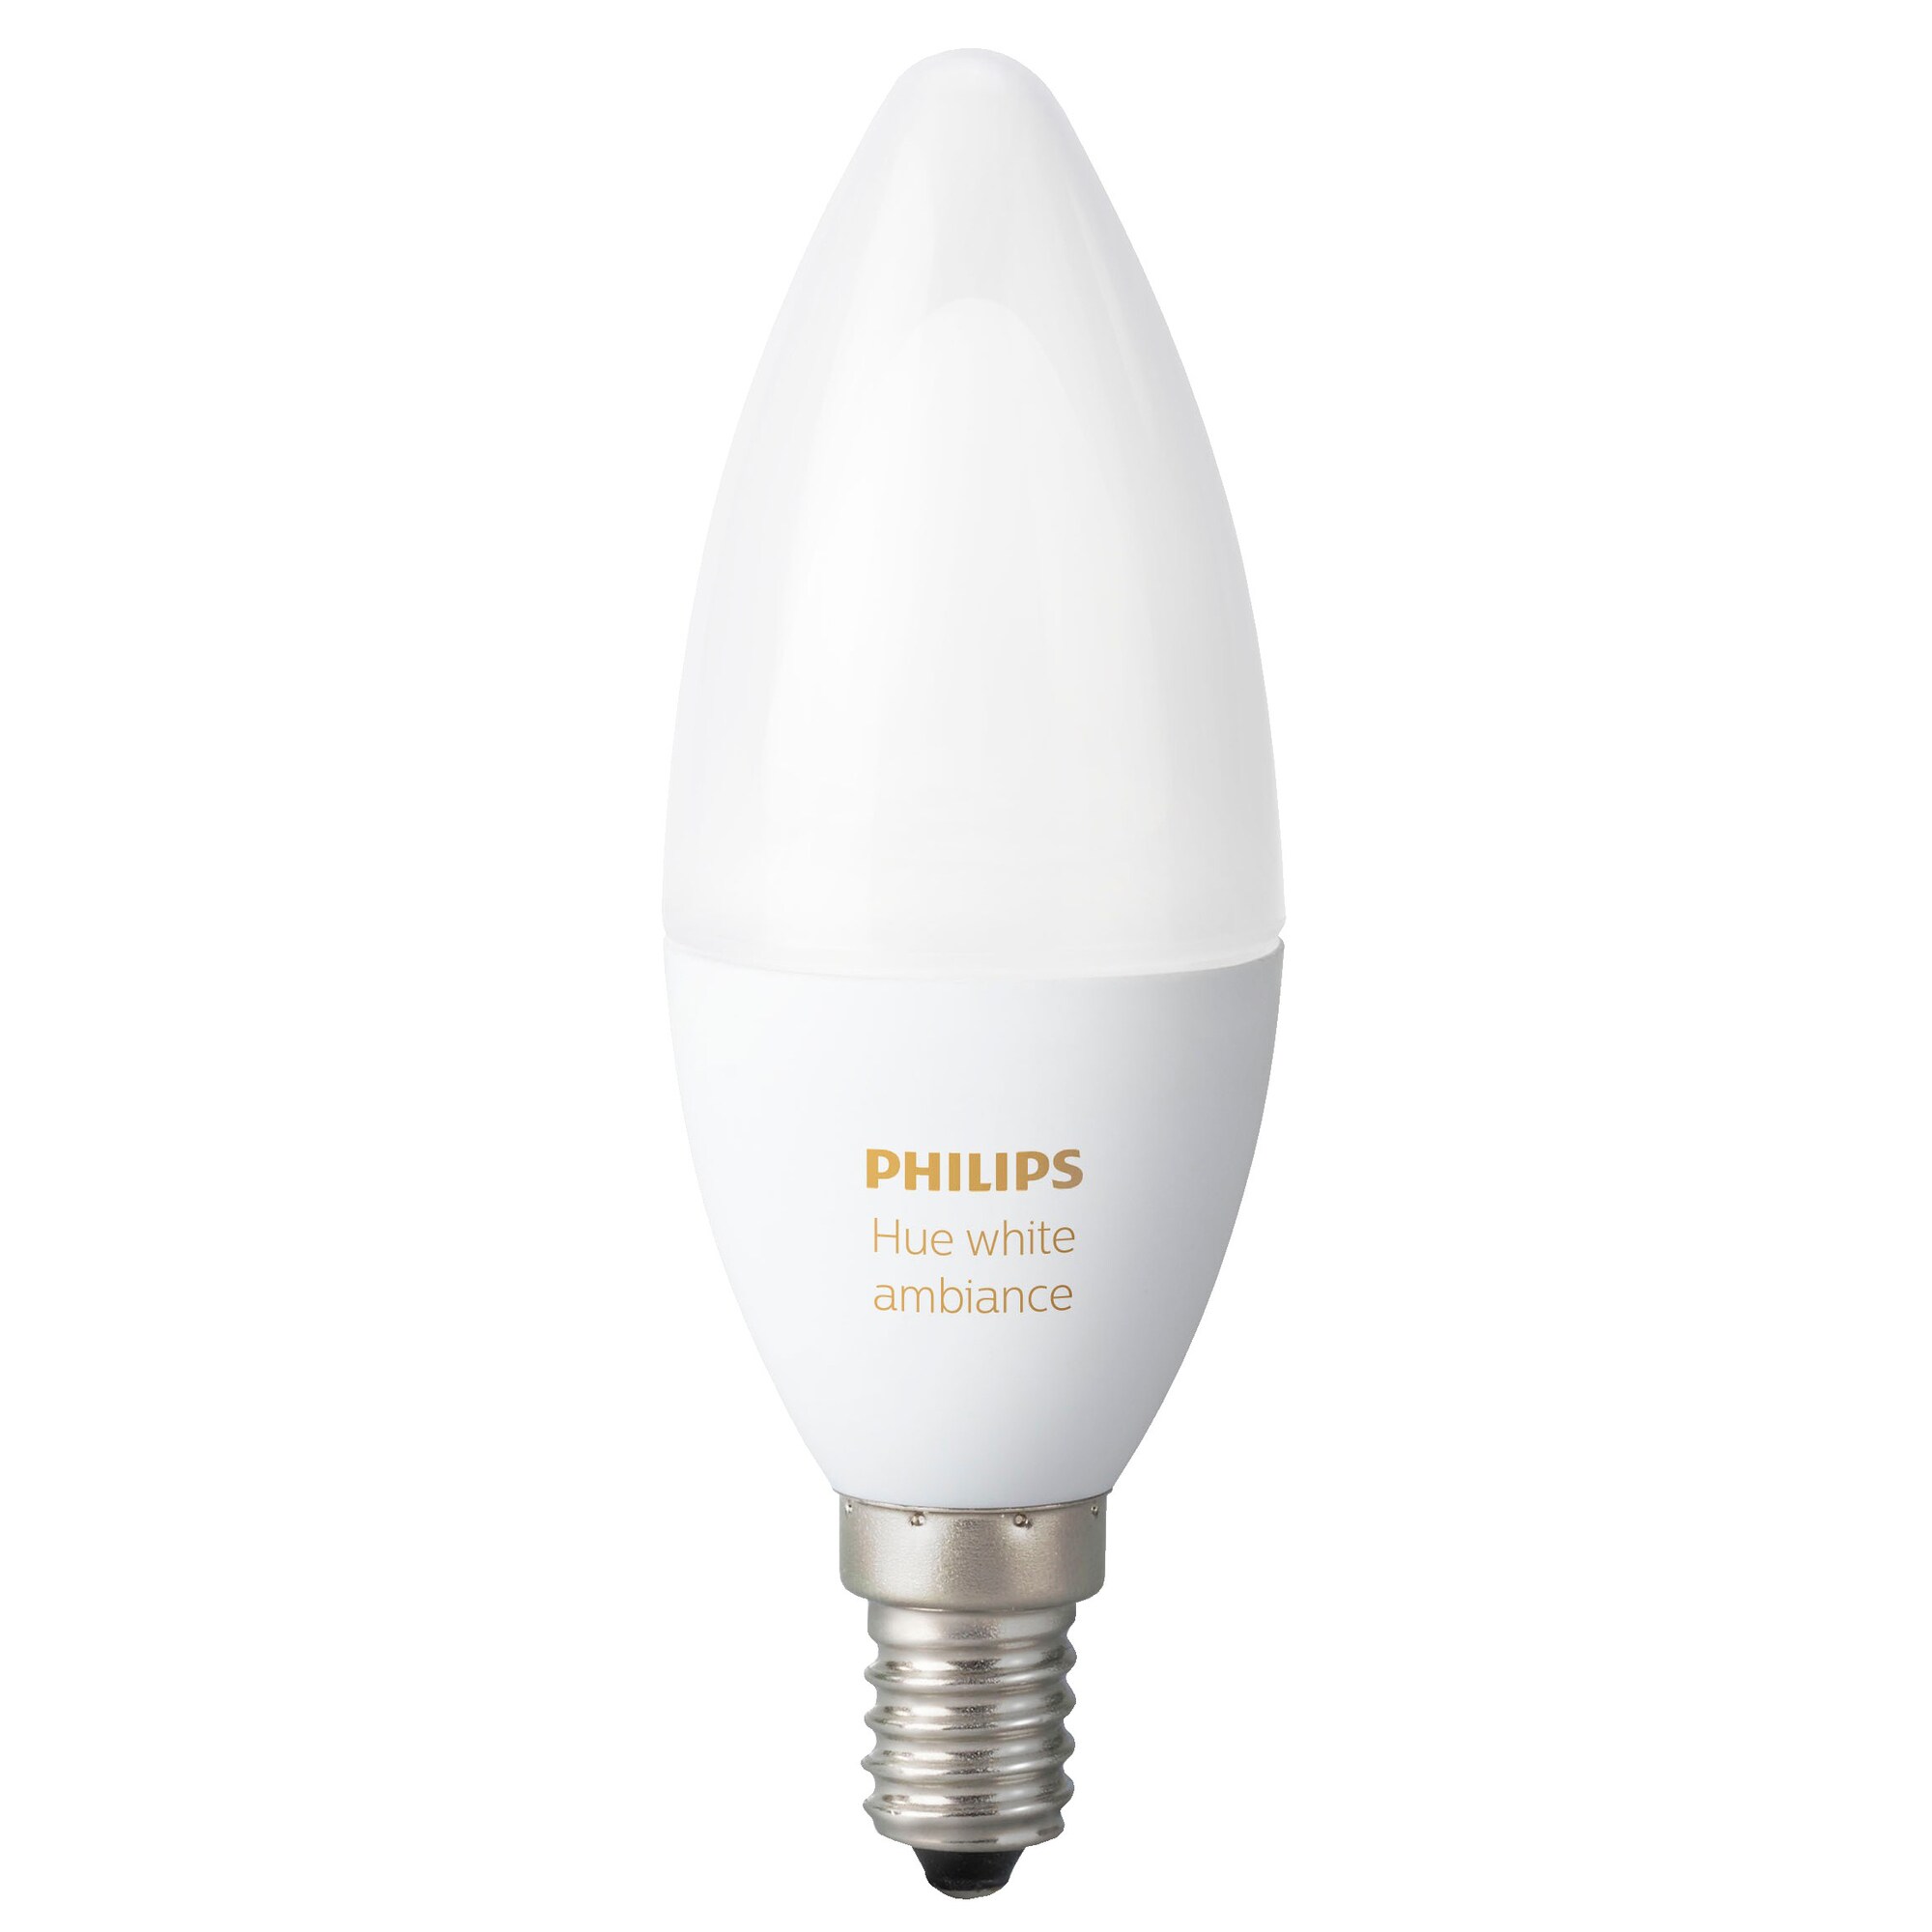 Philips Hue White ambiance pære 6W B39 E14 - Smart belysning ...